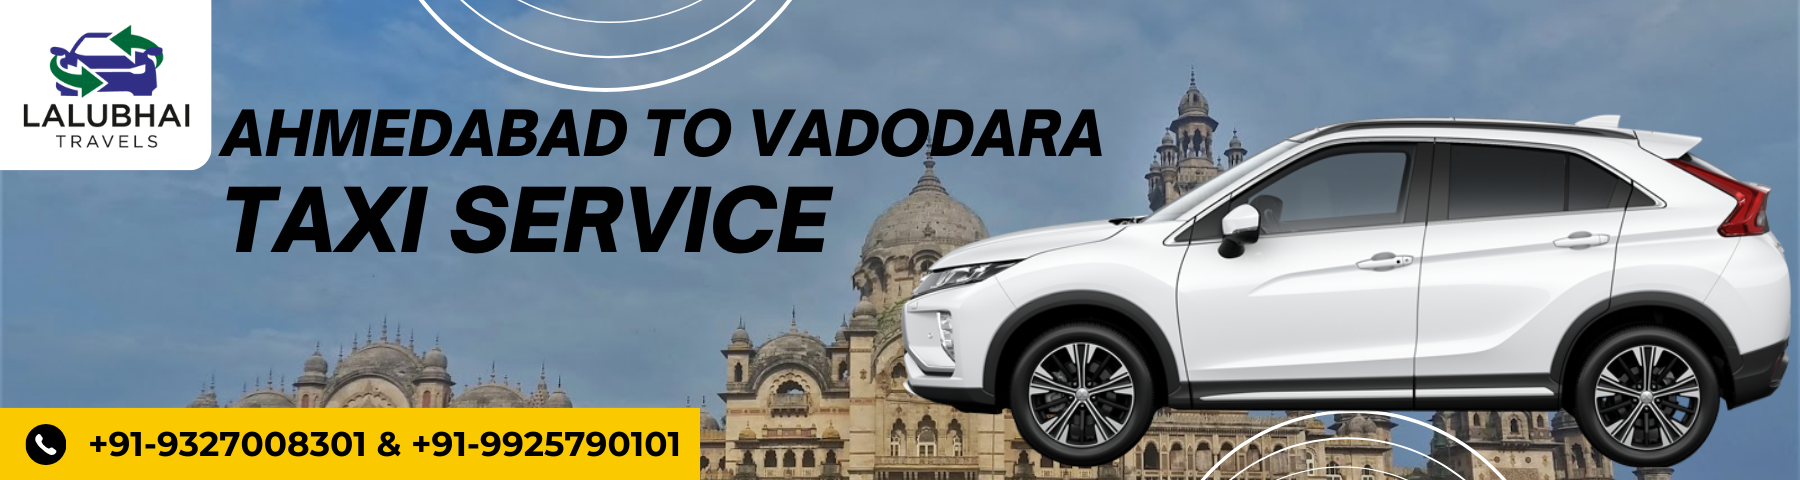 Ahmedabad To Vadodara Taxi Service